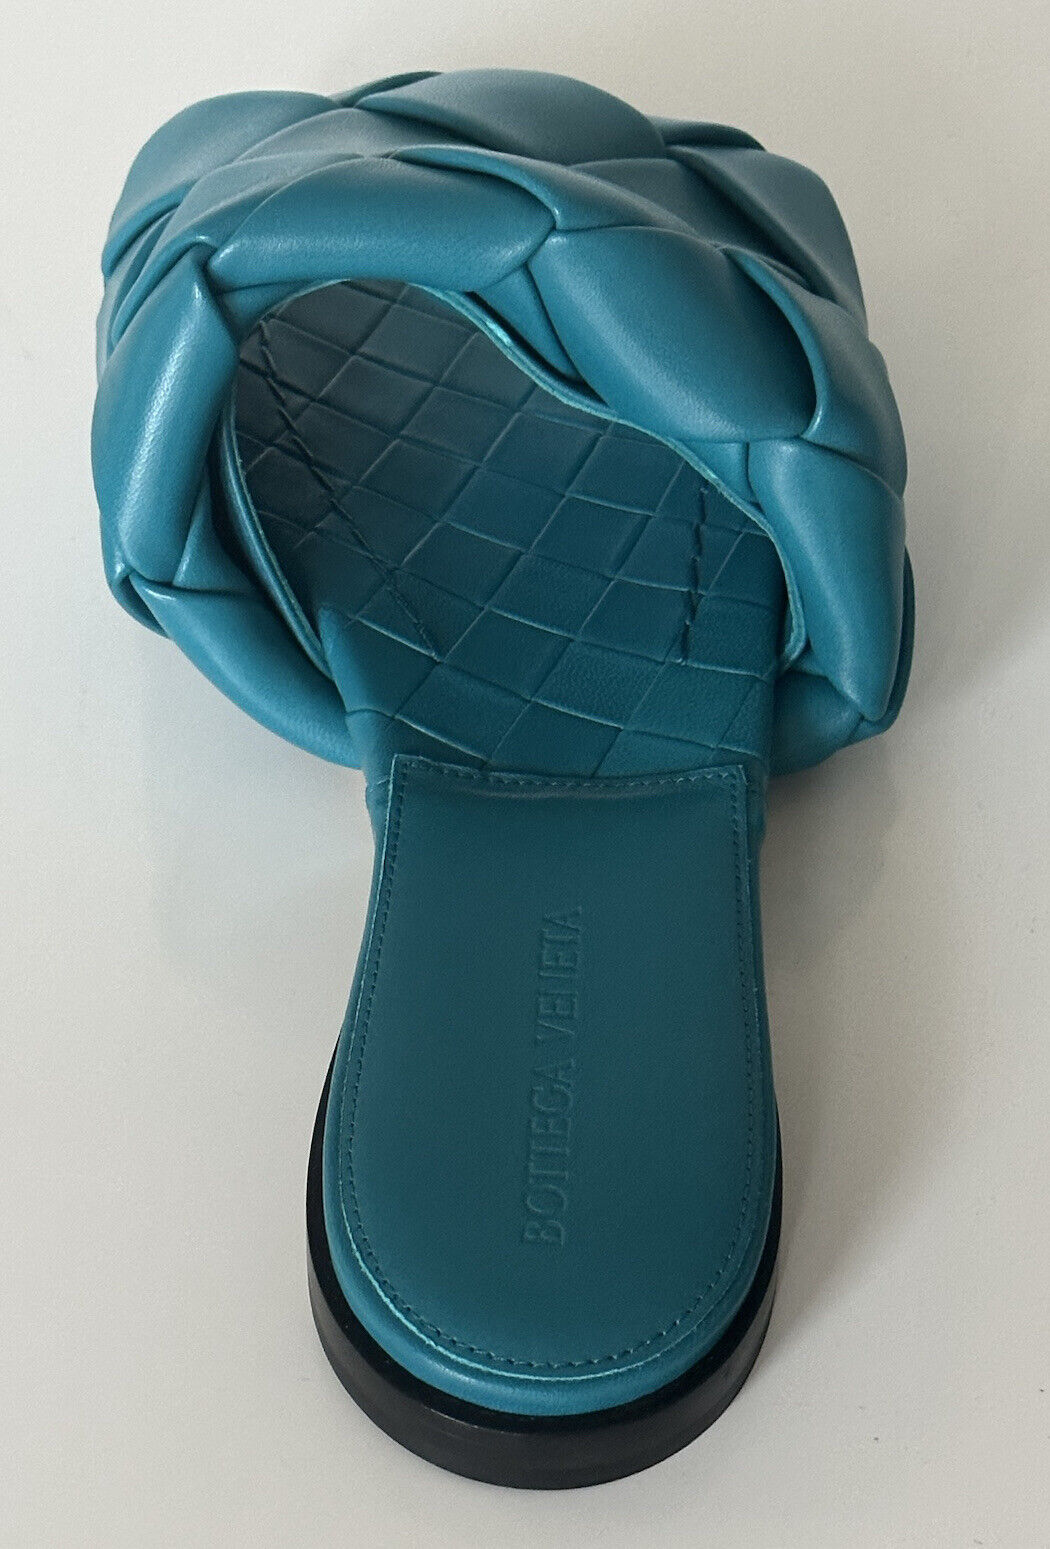 NWT $1350 Bottega Veneta Petroleum Blue Flat Sandals Shoes 8 US 608853